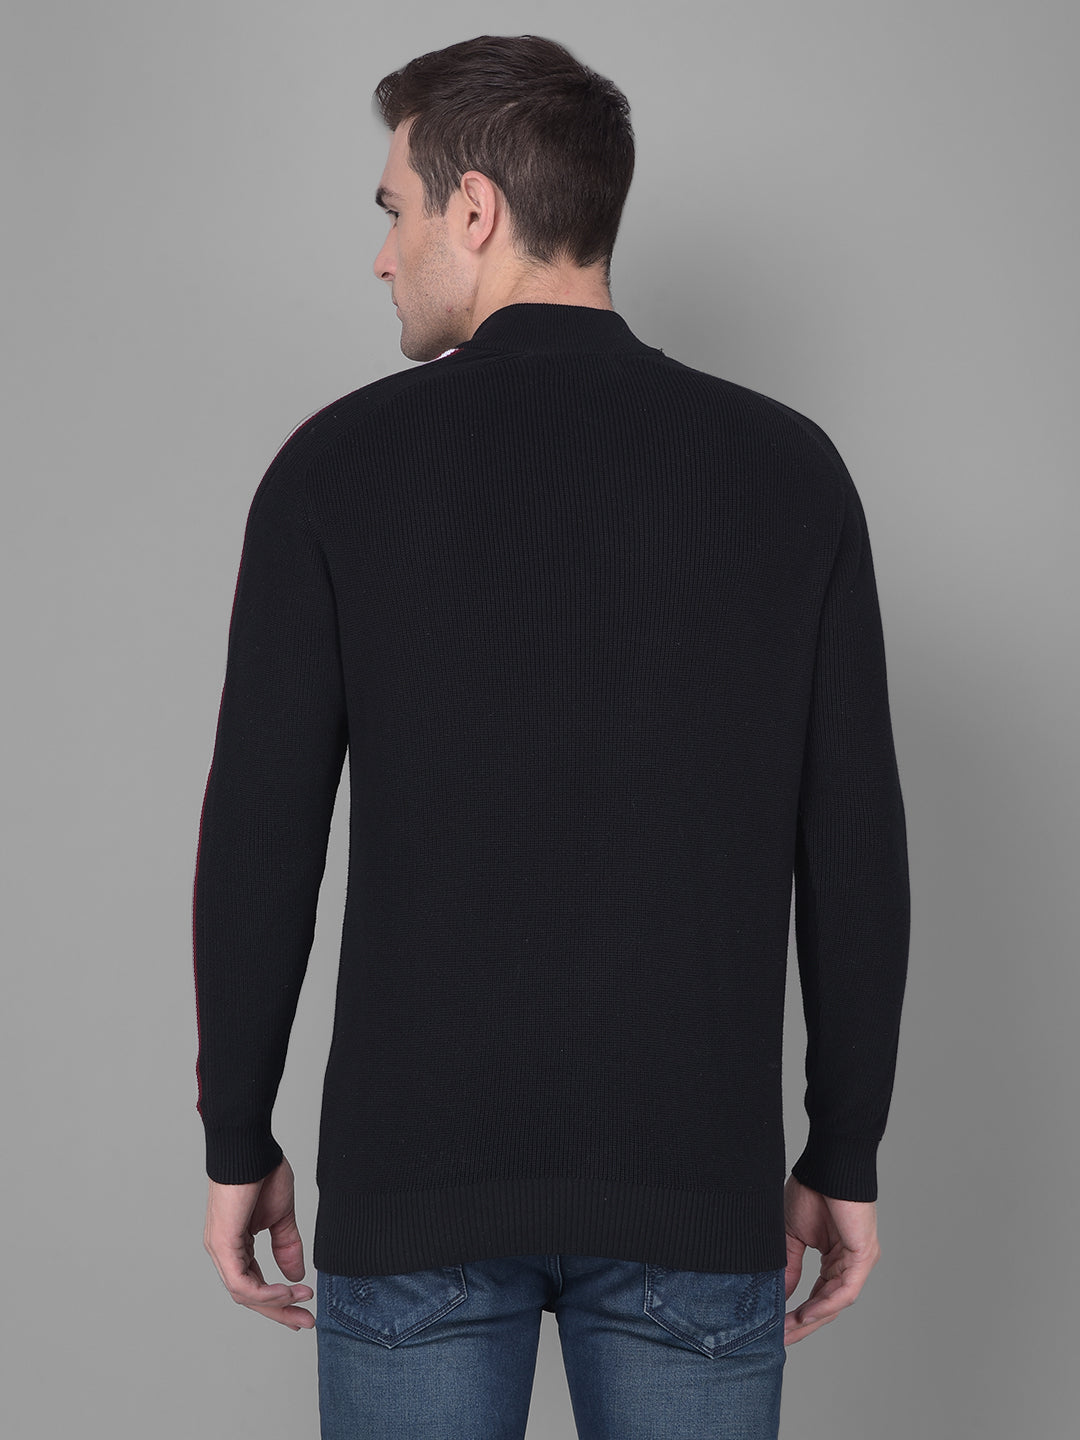 cobb solid black high neck zipper sweater